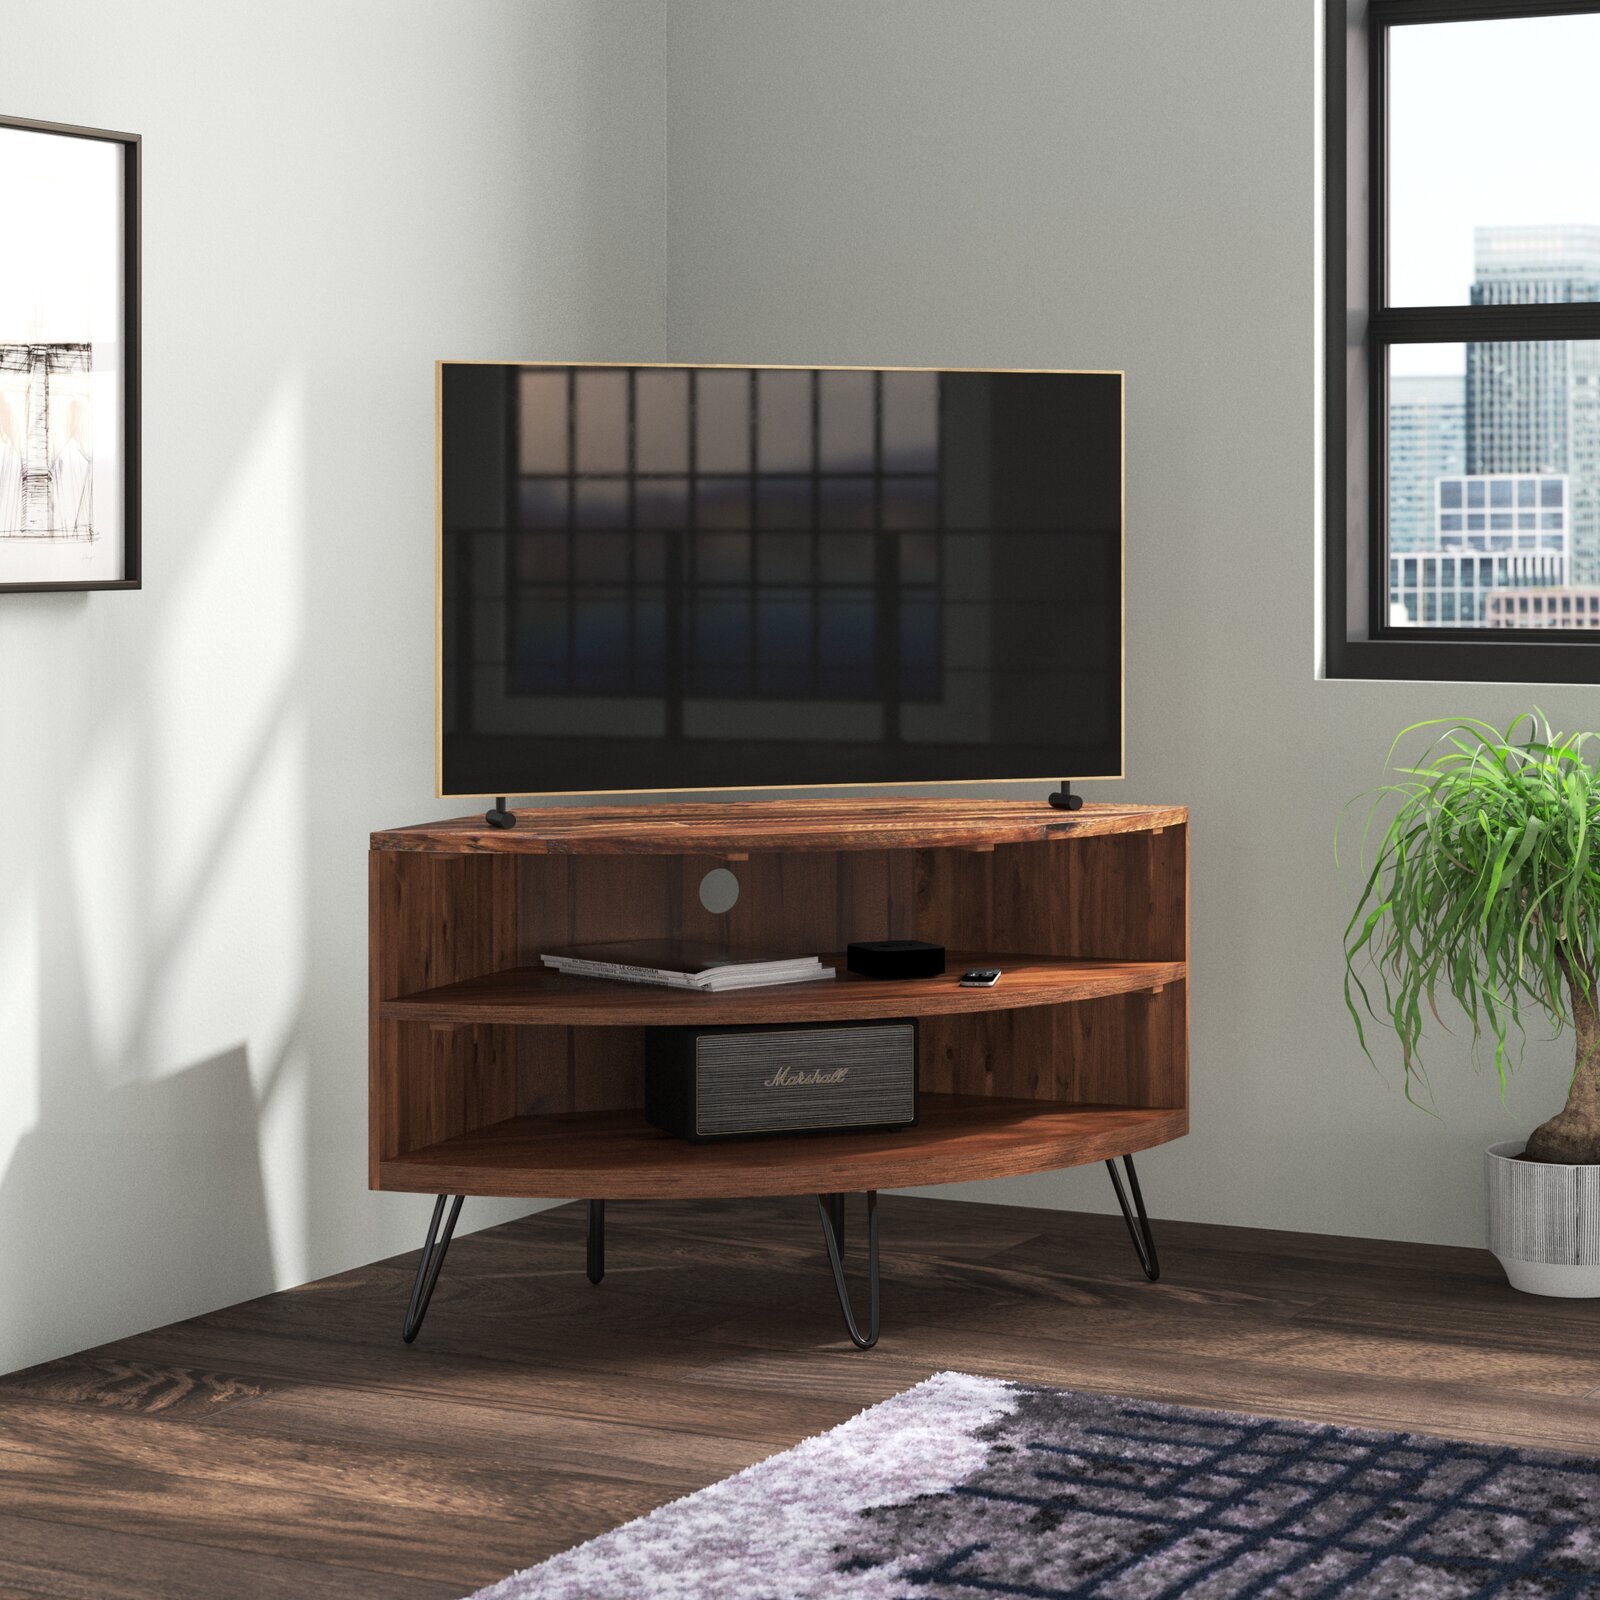 Mid century modern TV corner design